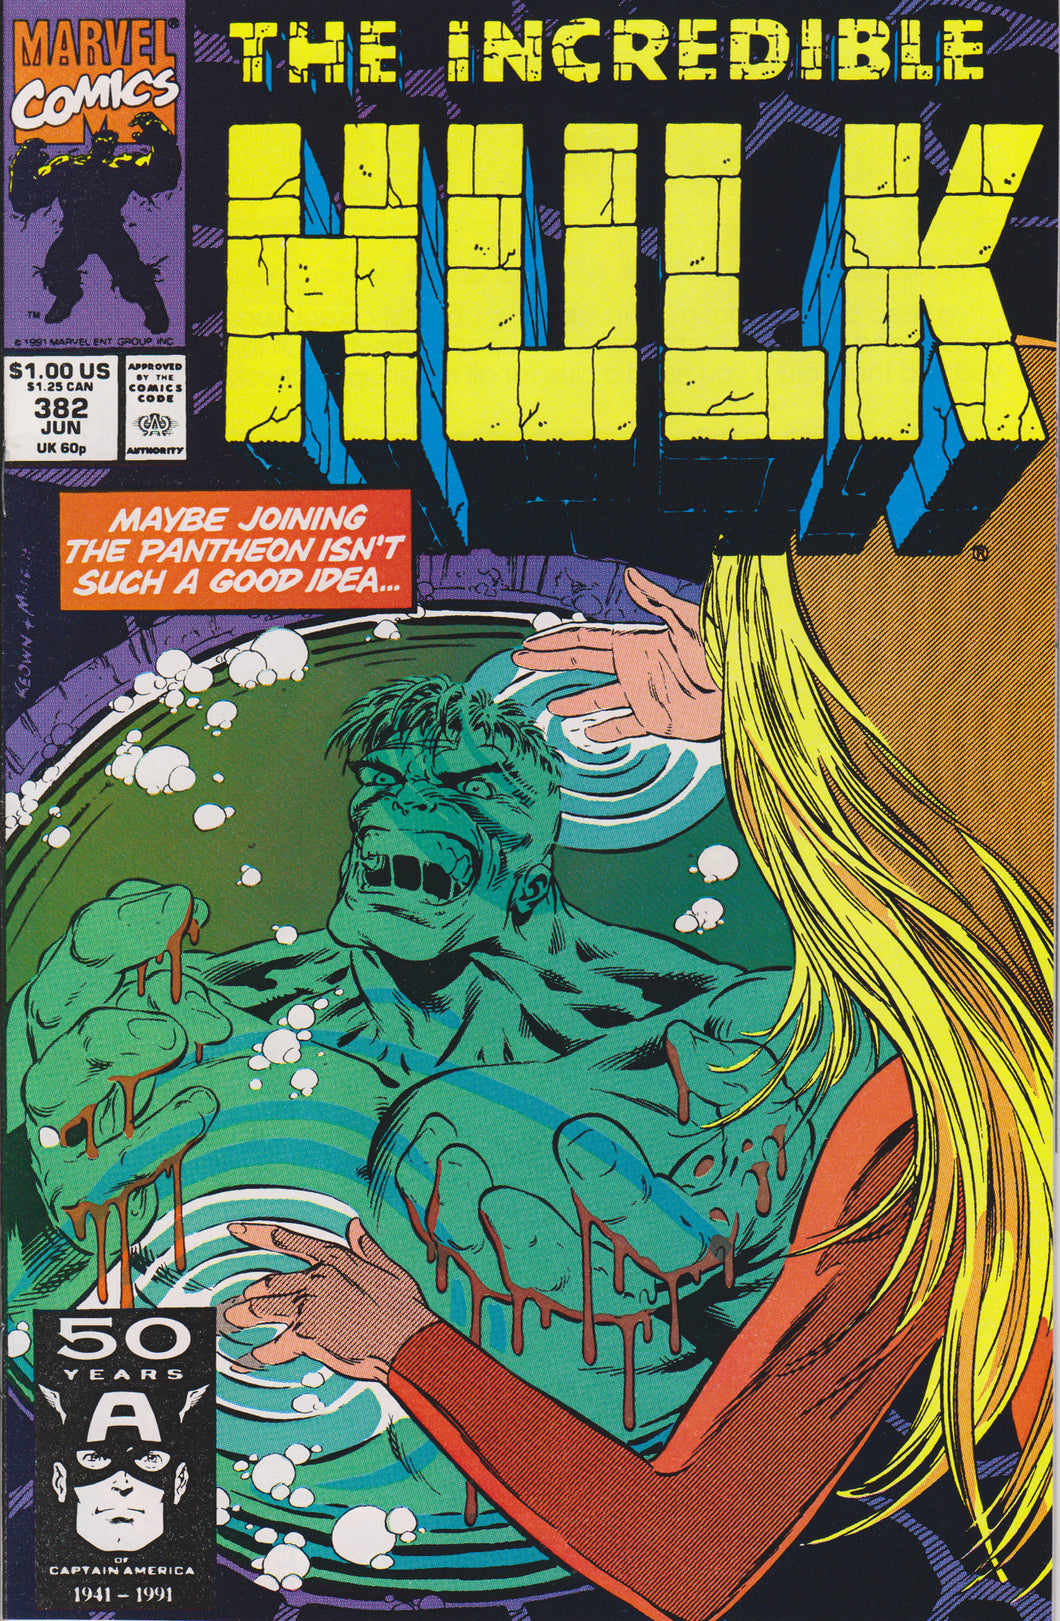 THE INCREDIBLE HULK #382 COMIC BOOK ~ Marvel Comics